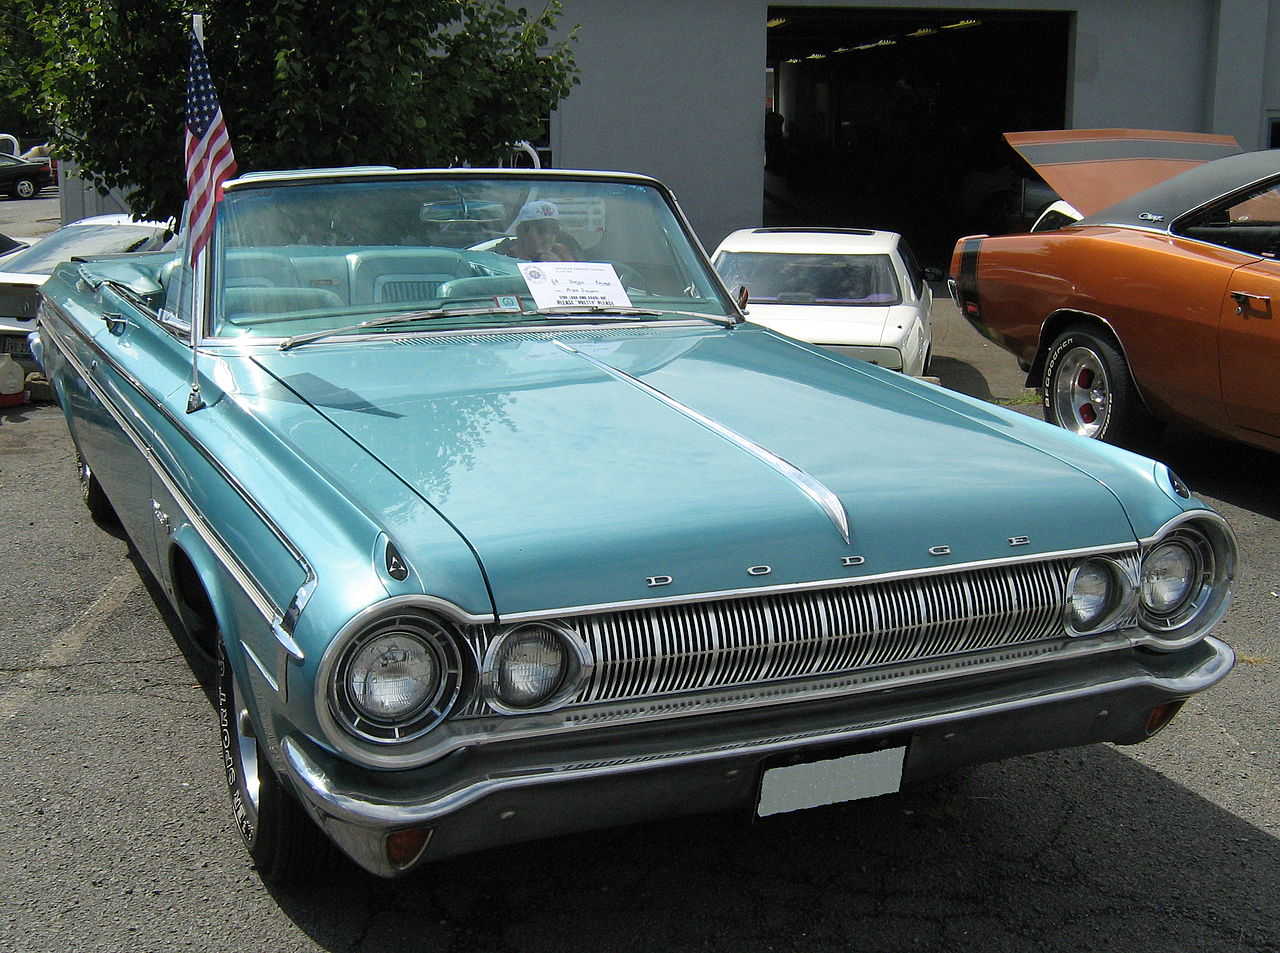 File:1964 Dodge Polara 500 conv front.jpg - Wikimedia Commons